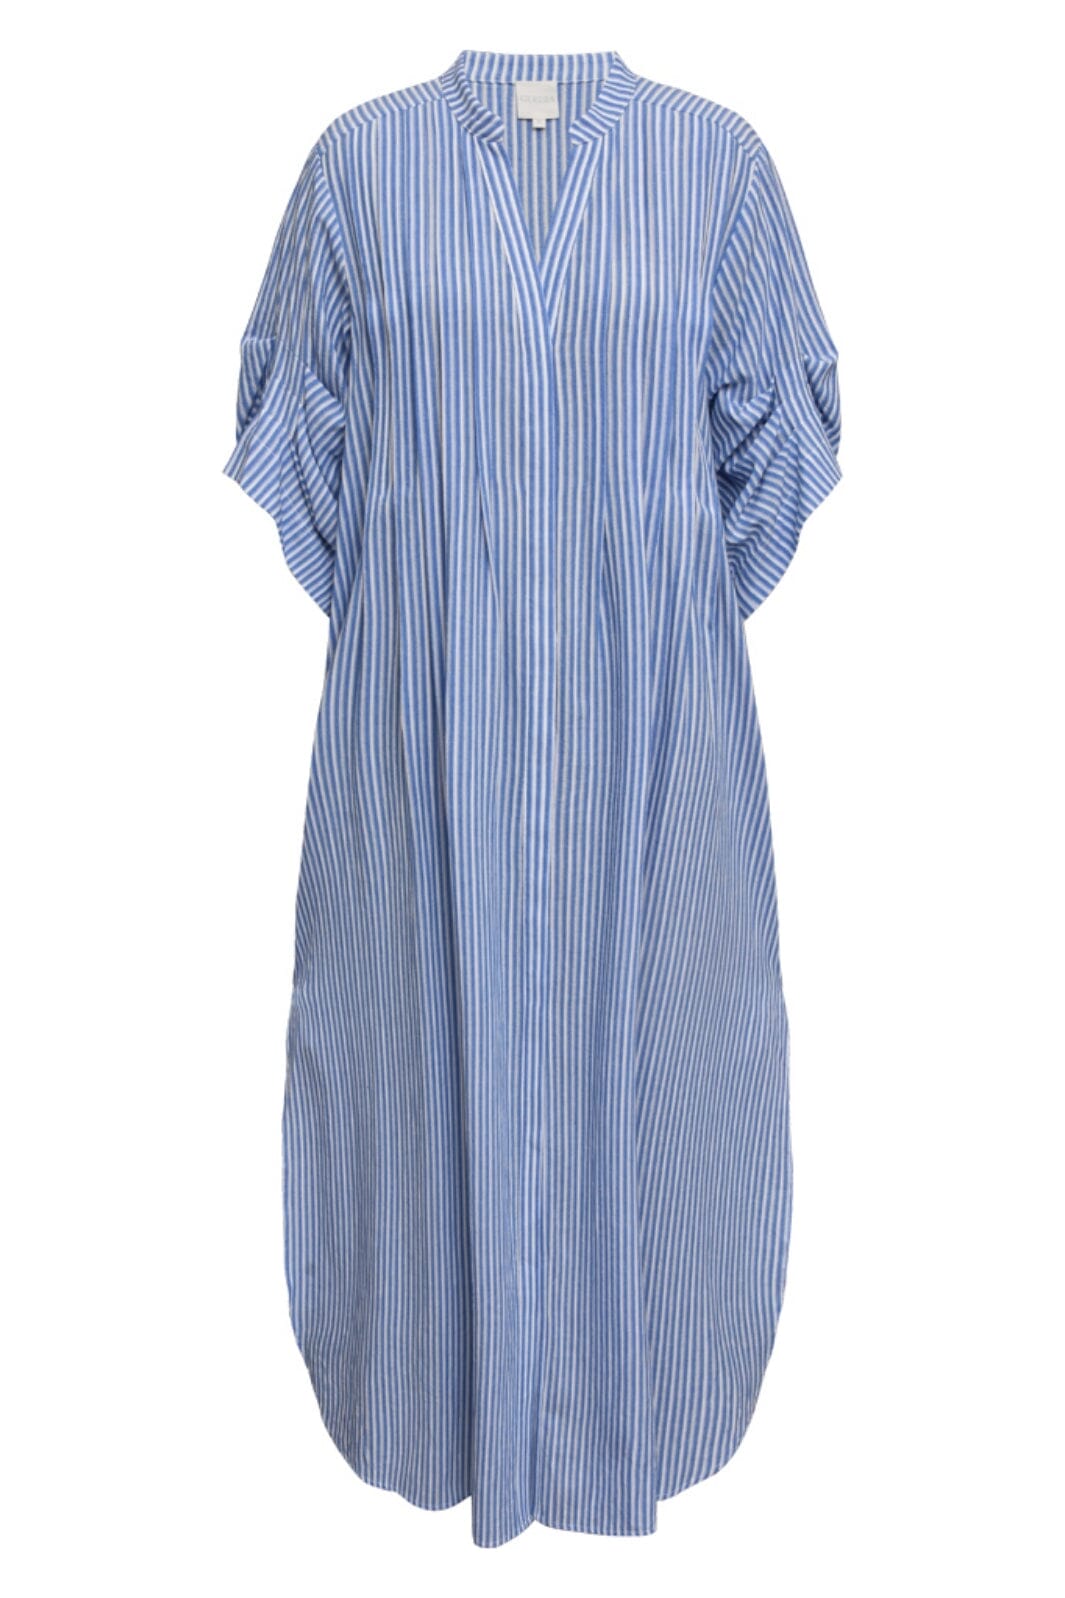 Gossia - Alexago Dia Shirt Dress - Blue Stripes Kjoler 